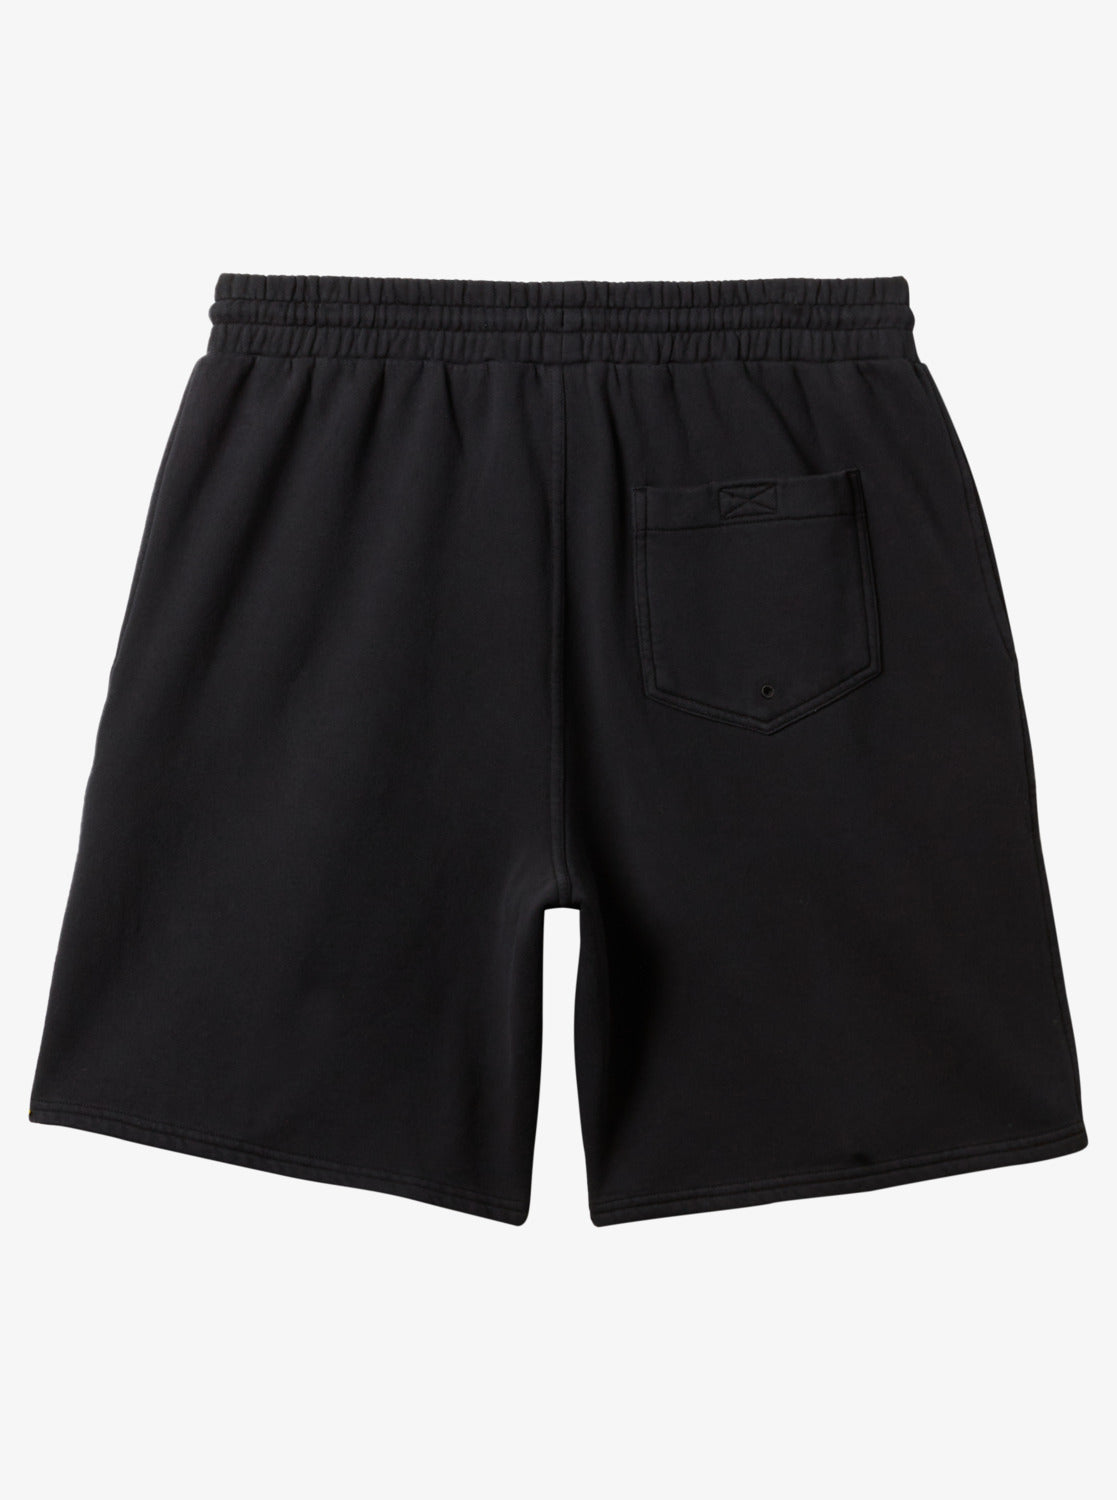 Quiksilver Salt Water Sweat Shorts in Black